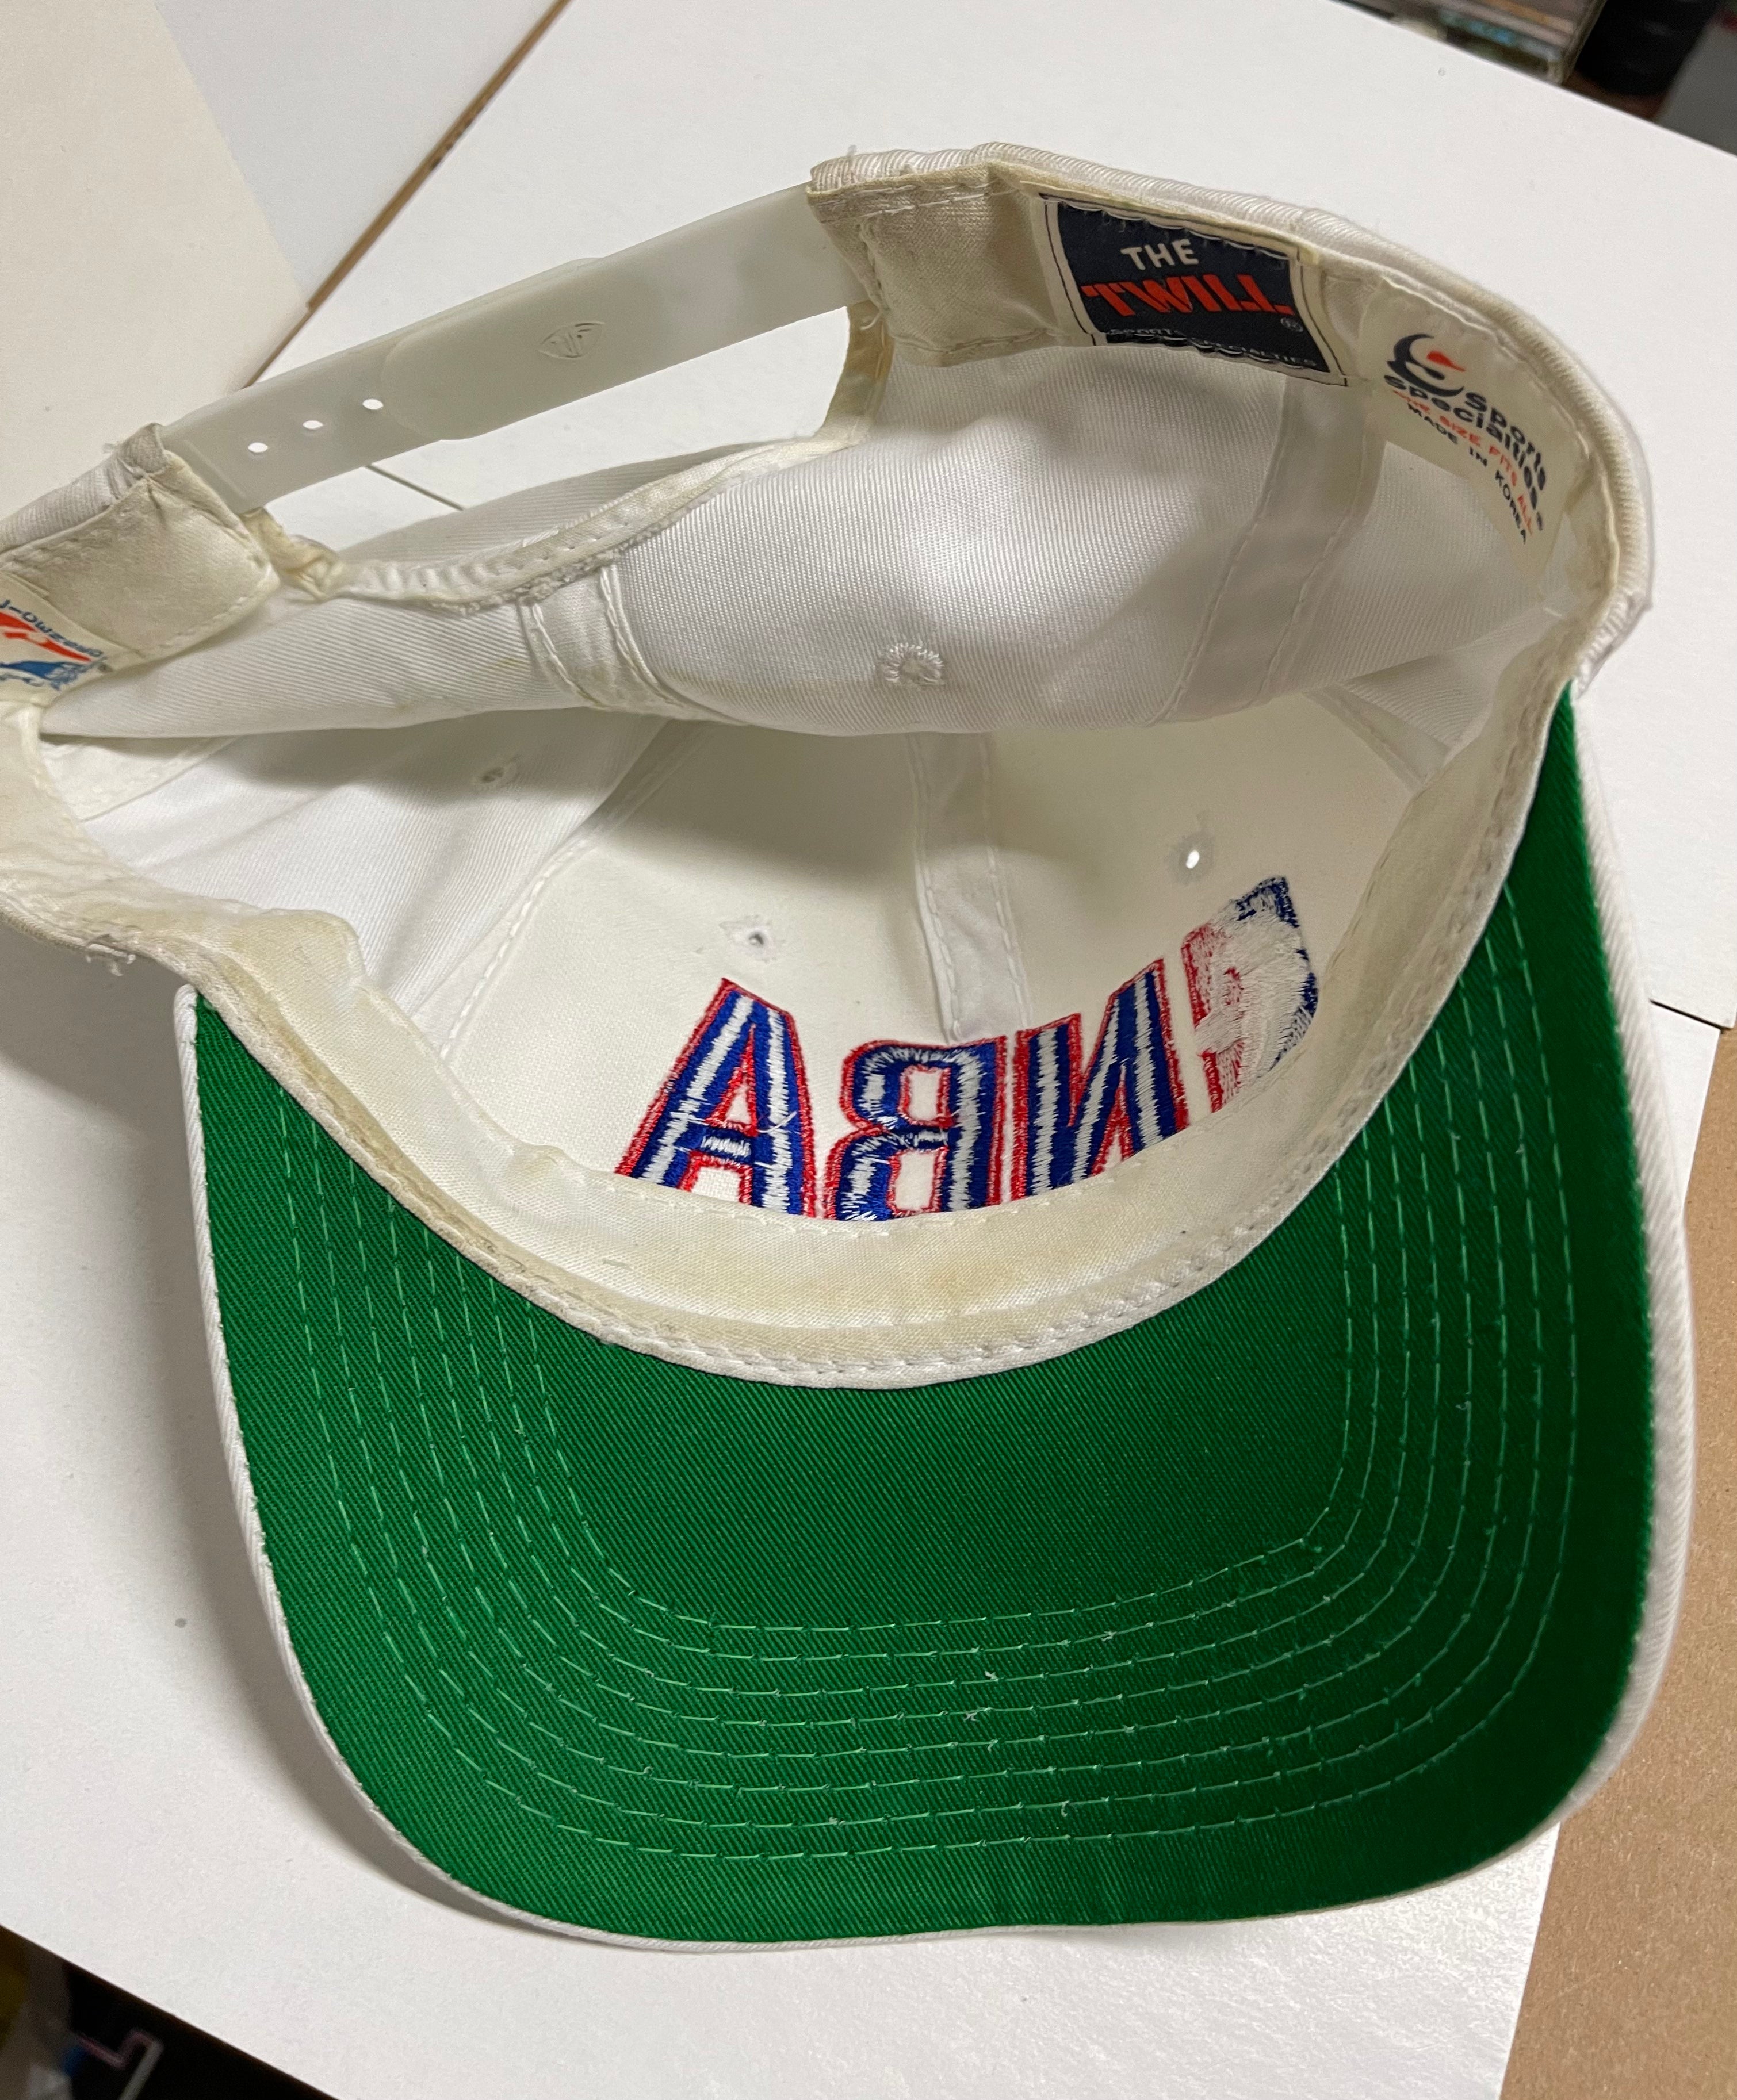 NBA logo limited issued. Baseball vintage hat